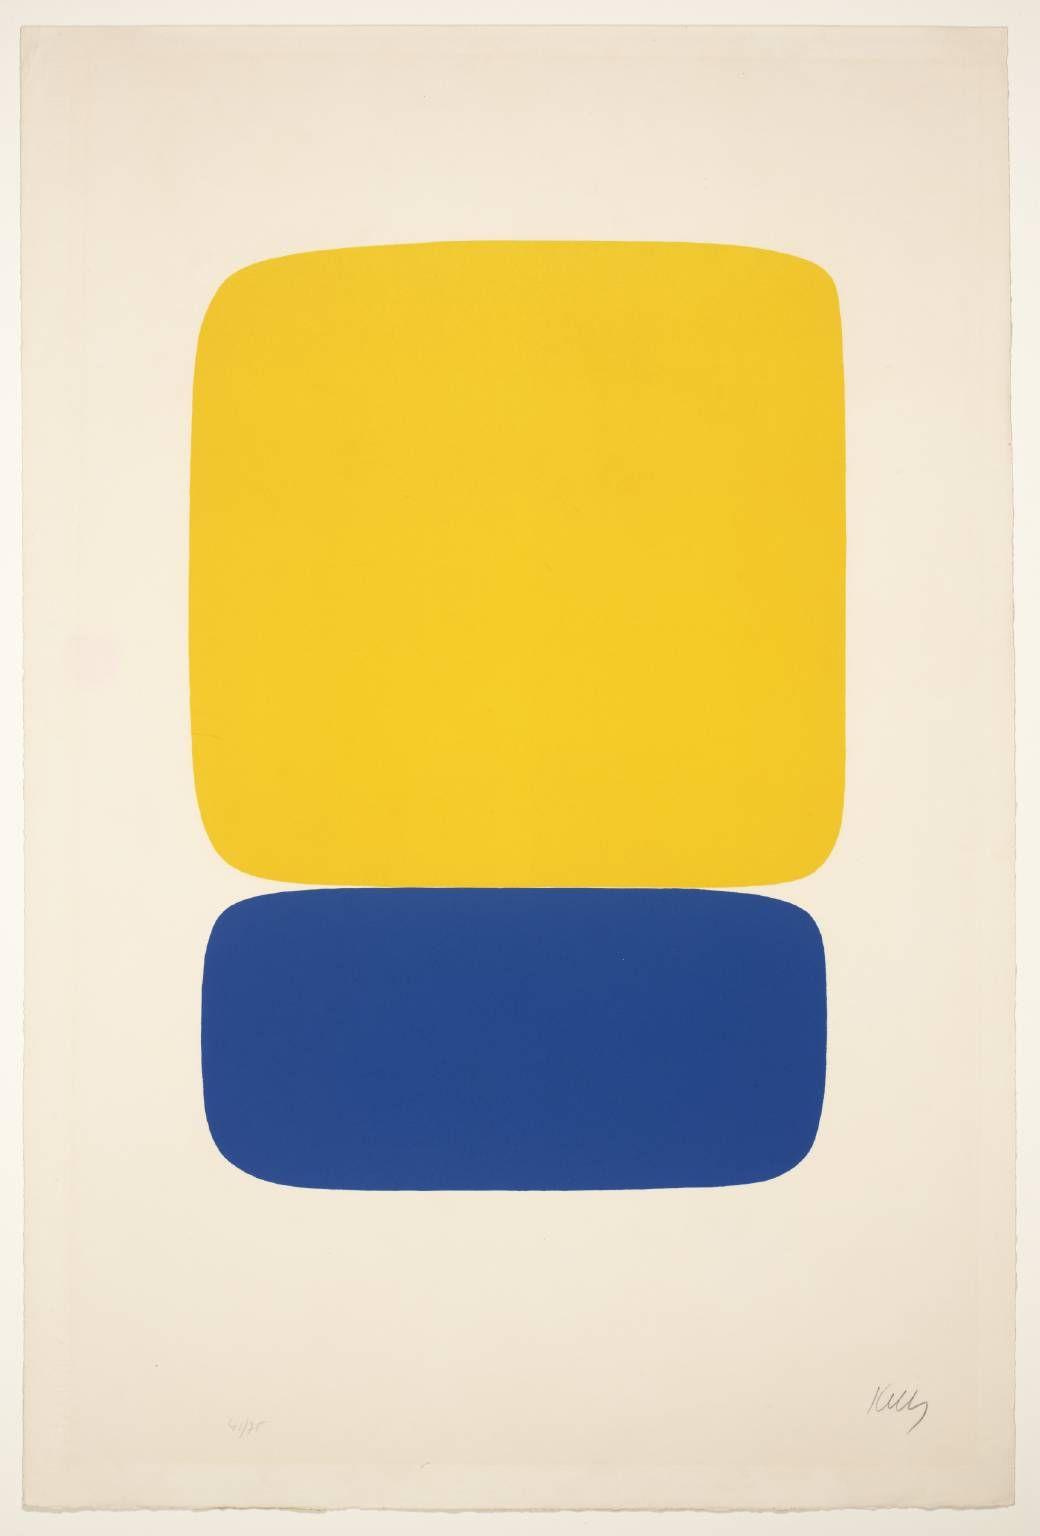 Dark Blue and Yellow Logo - Yellow over Dark Blue', Ellsworth Kelly, 1964-5 | Tate